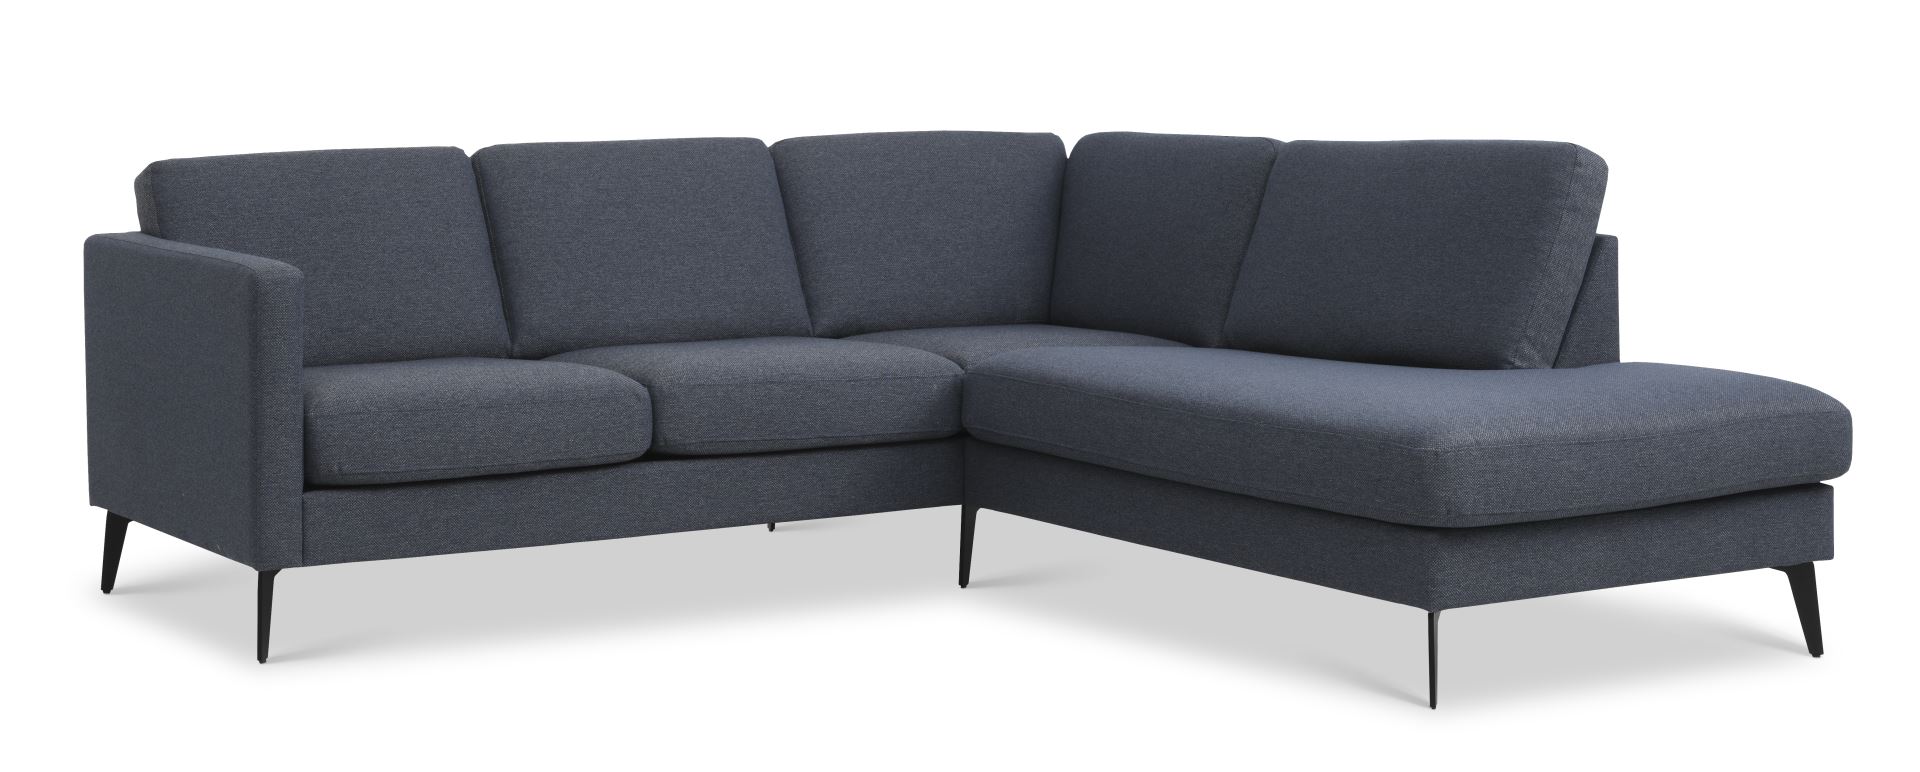 Ask sæt 53 lille OE sofa, m. højre chaiselong - navy blå polyester stof og Eiffel ben